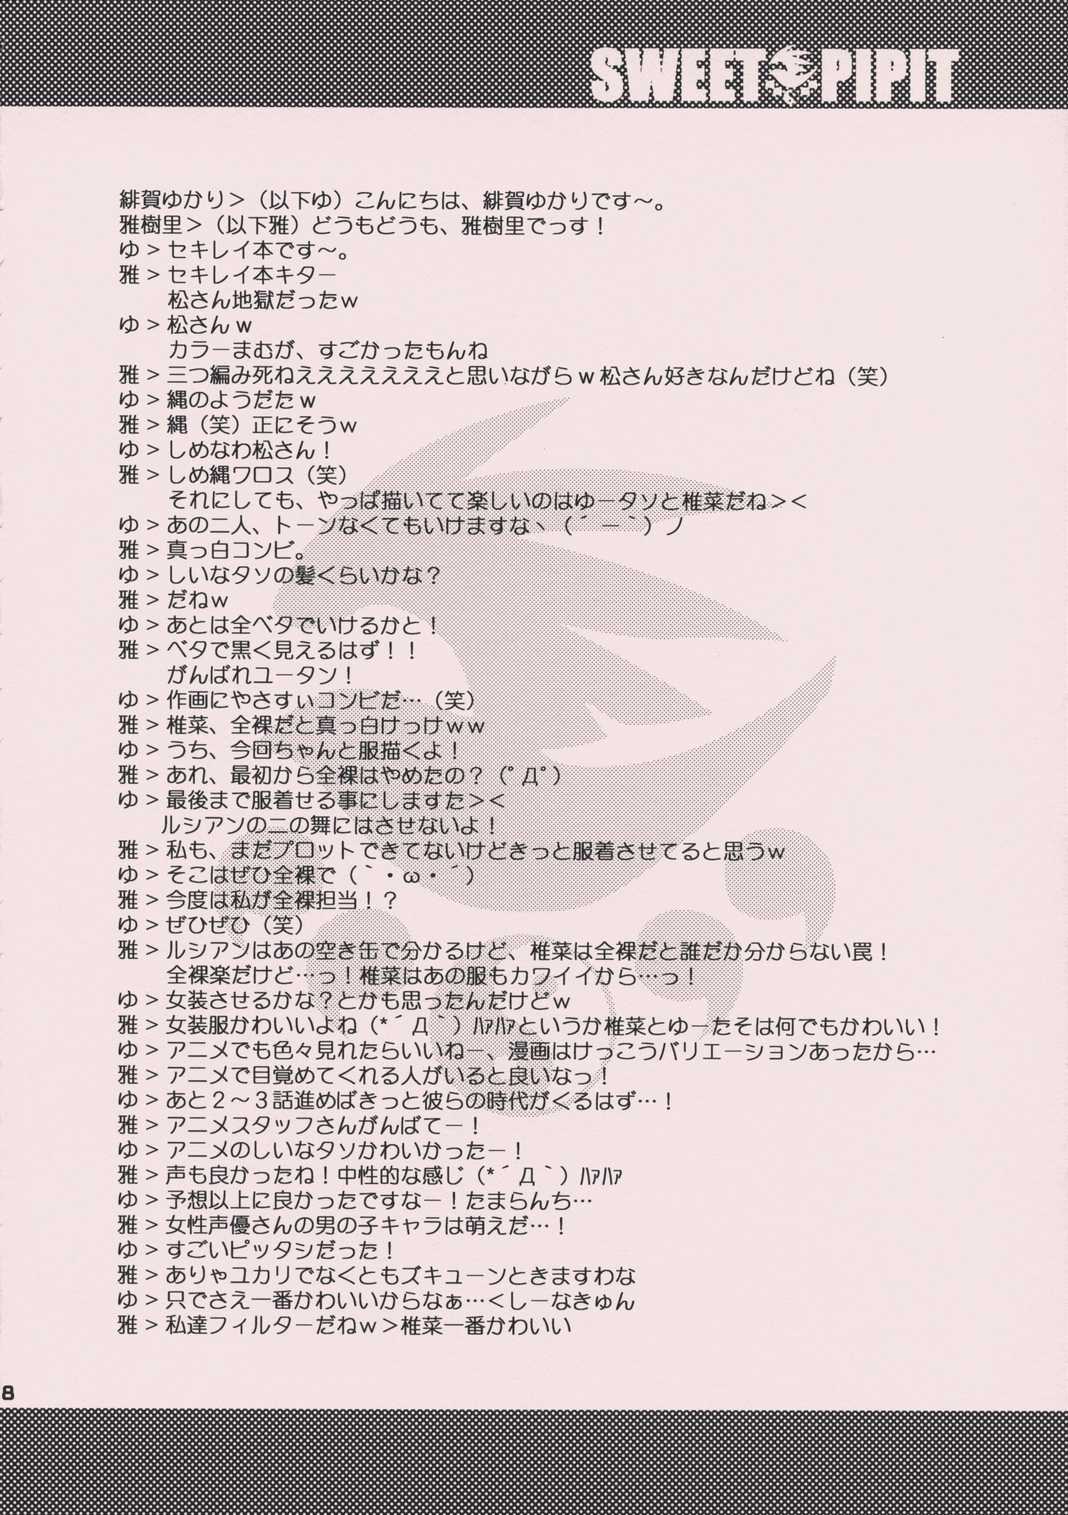 (C74)[Satsukidoh (Miyabi Juri) &amp; Nodoame (Ishida Nodoame)] SWEET PIPIT (Sekirei) (C74)[皐月堂 (雅樹里) &amp; のど雨 (石田のどあめ)] SWEET PIPIT (セキレイ)